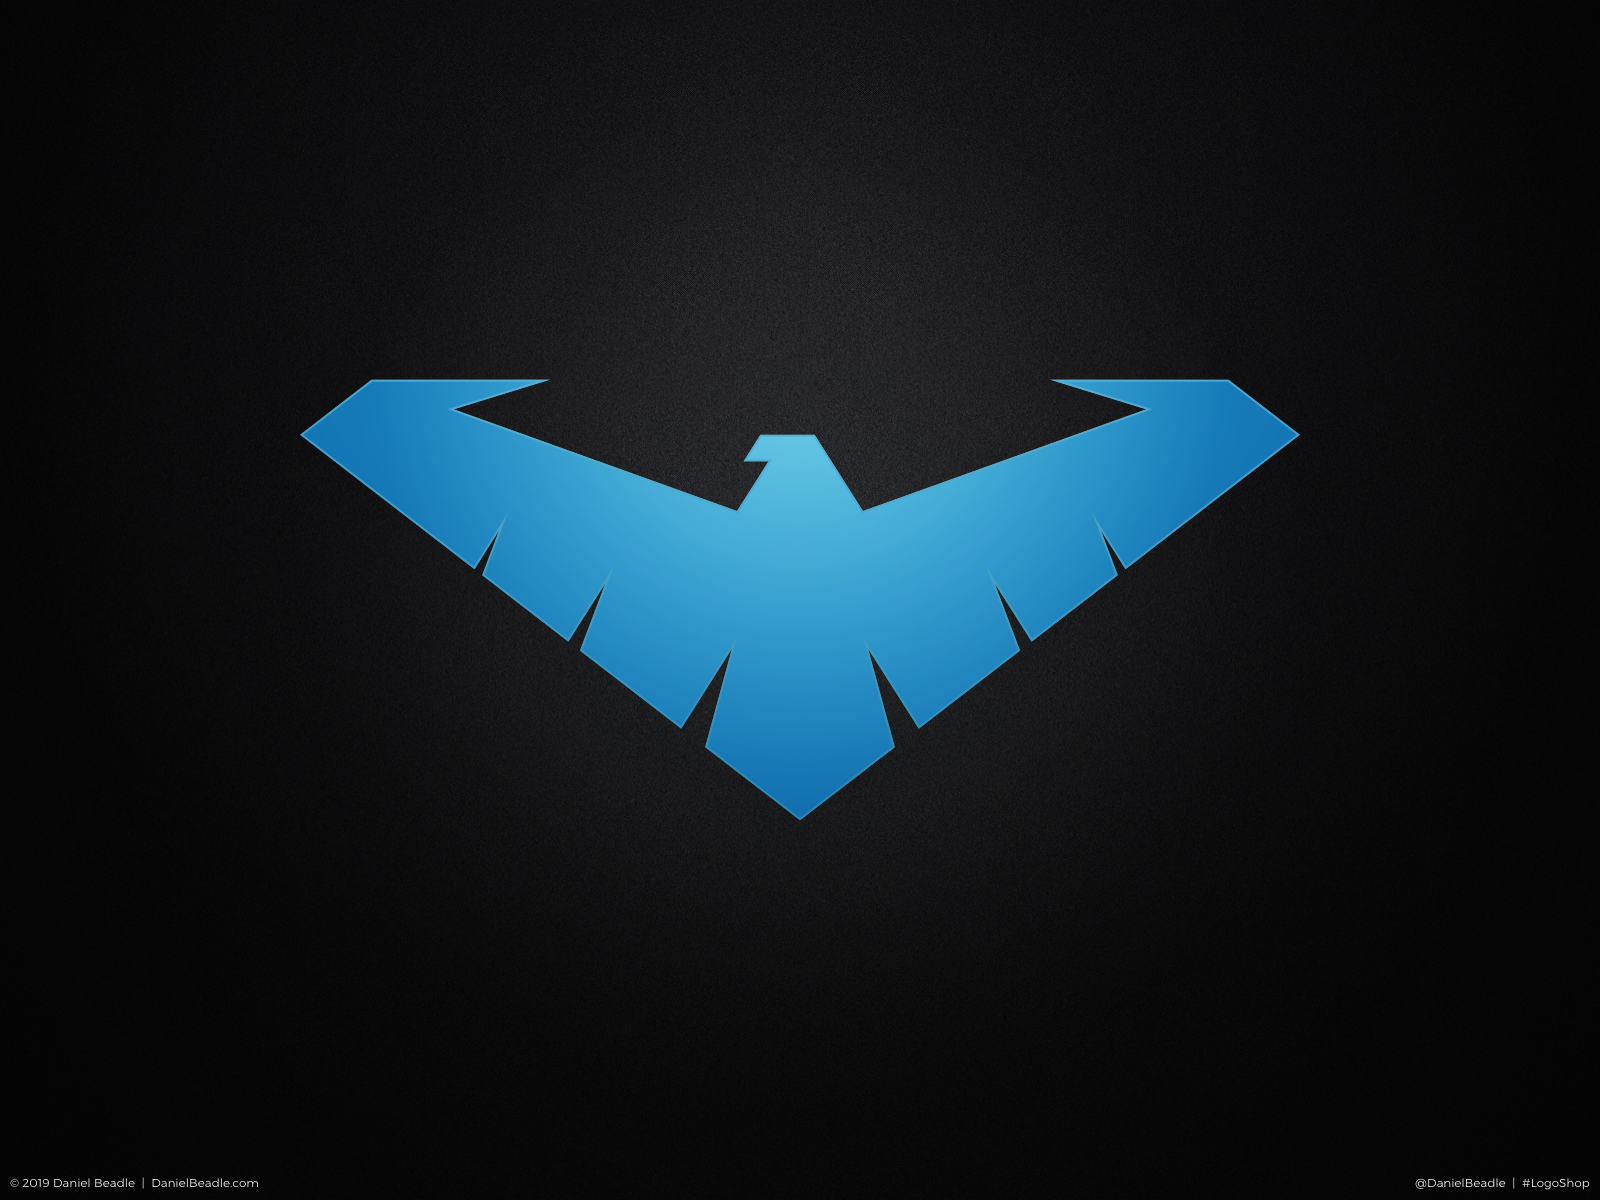 batman and nightwing logo